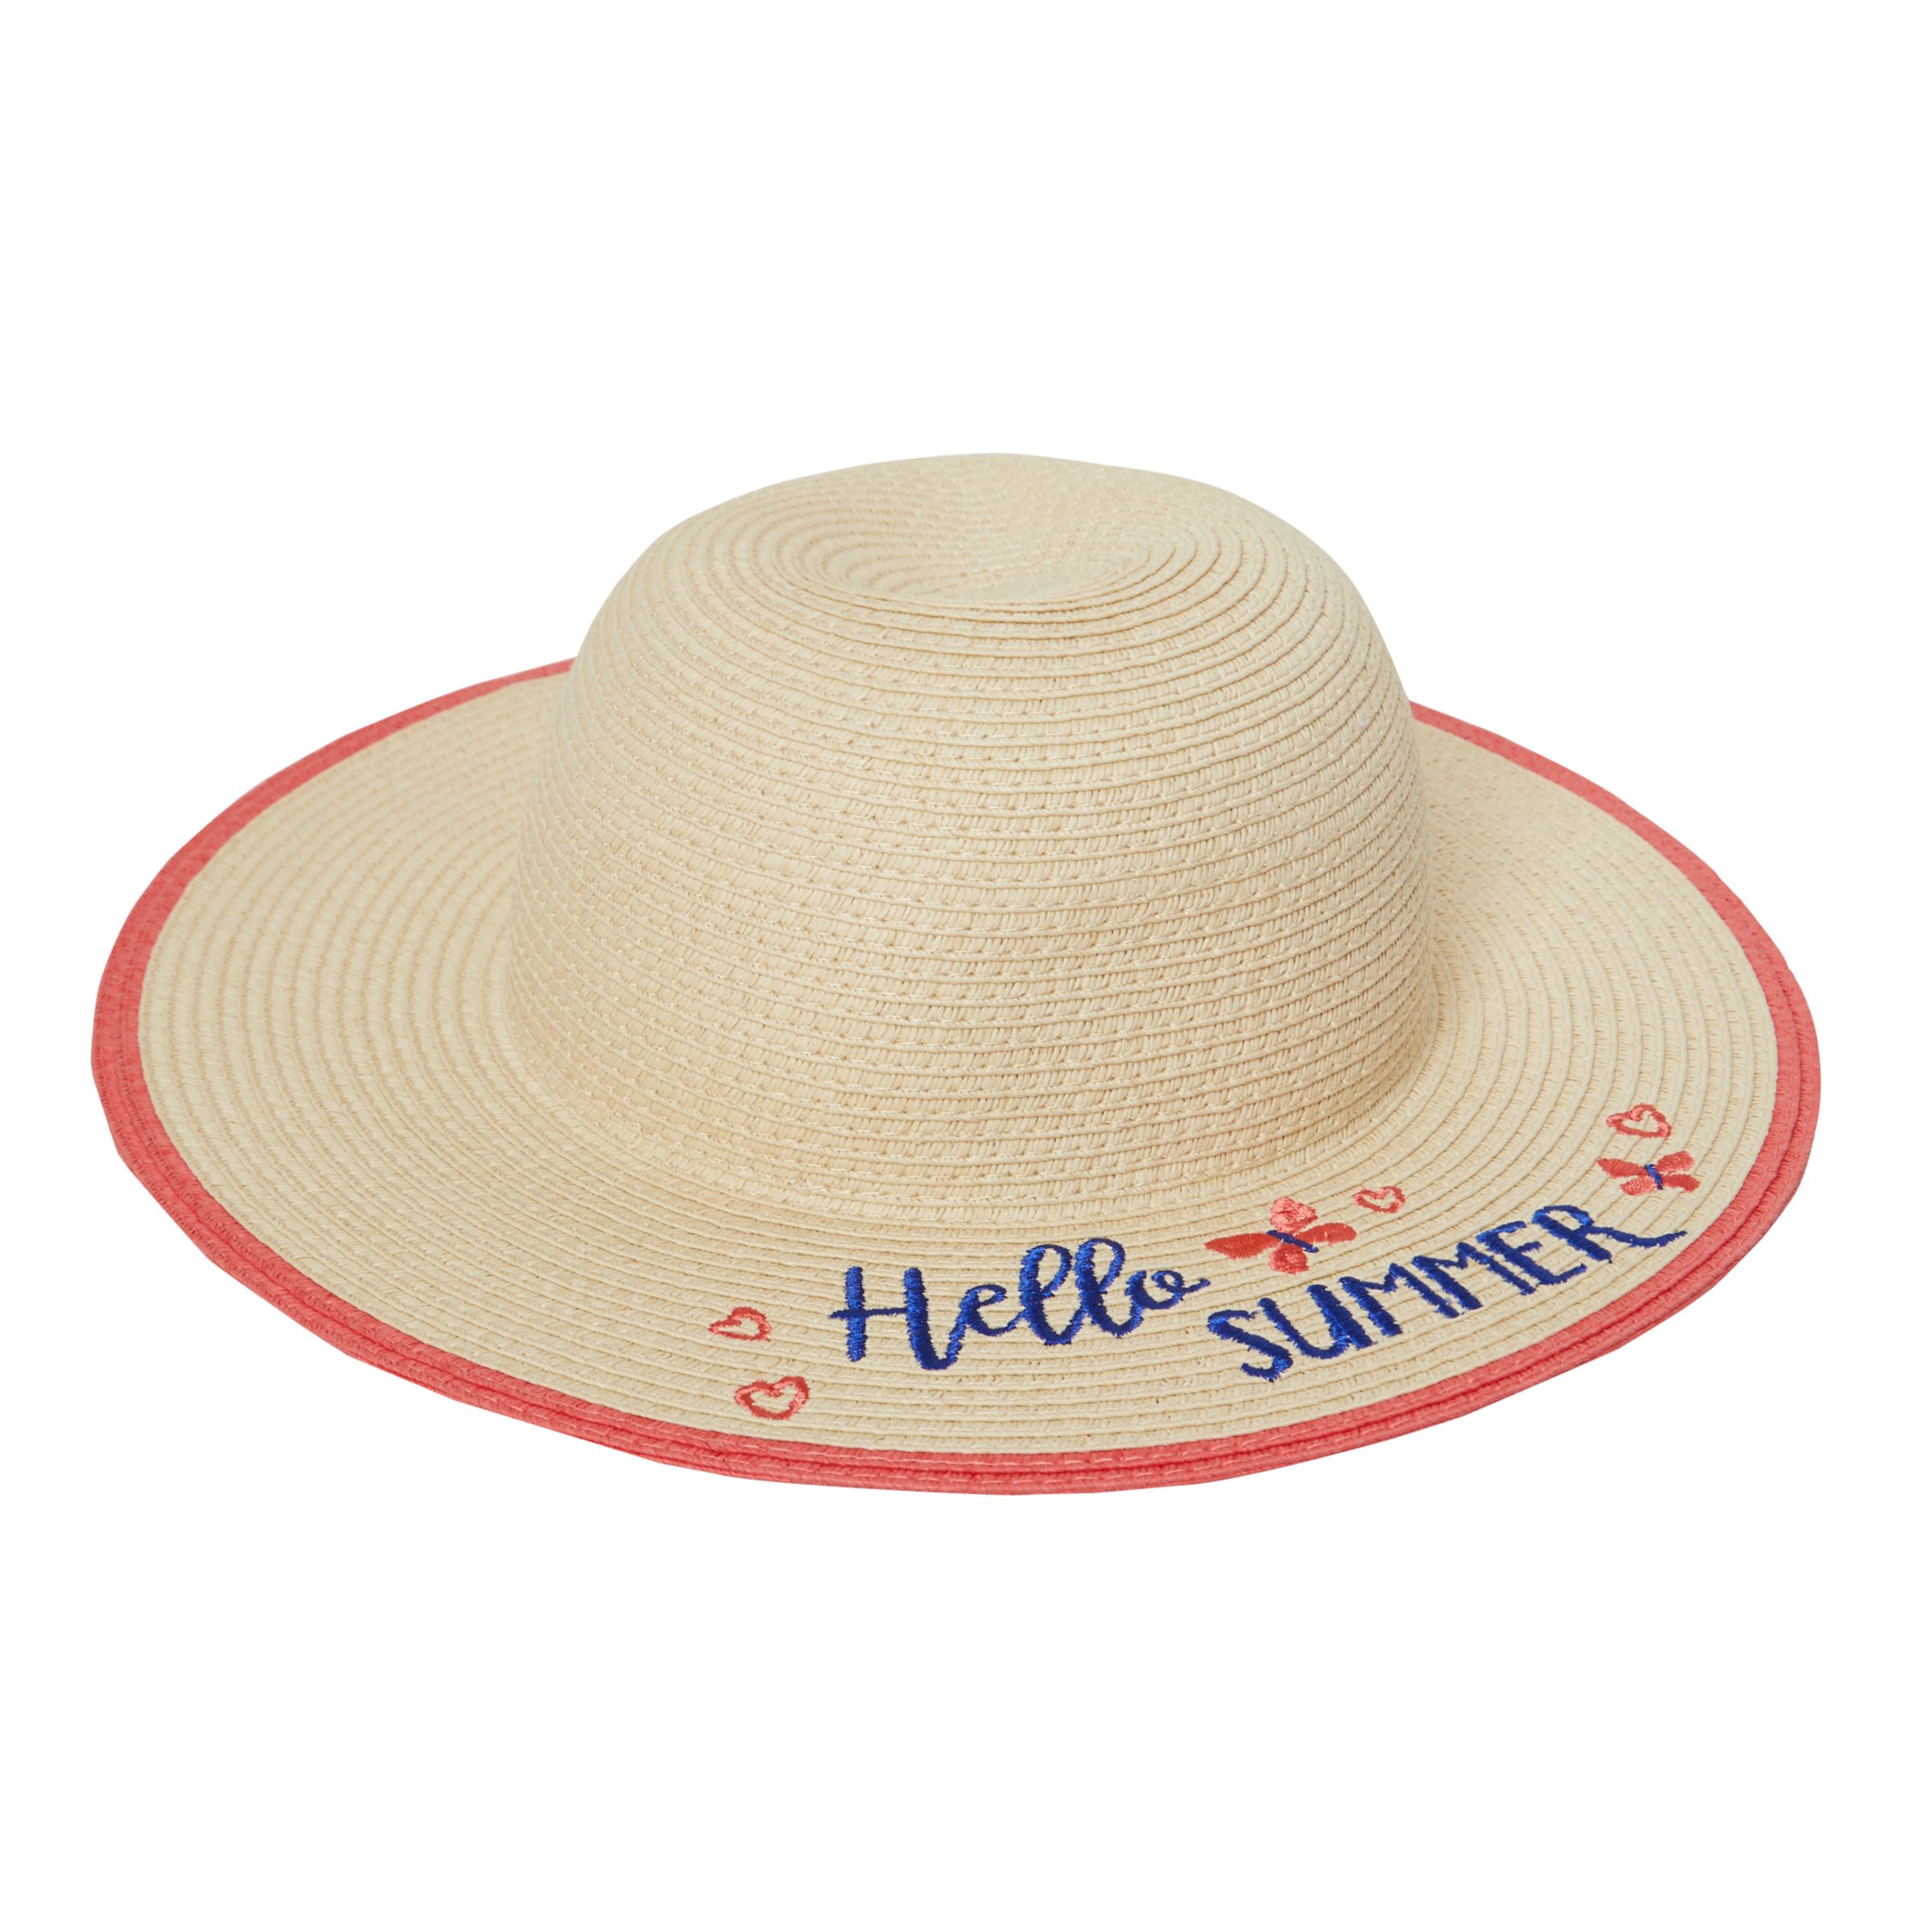 John Lewis & Partners Children's Hello Summer Straw Hat, Natural, S